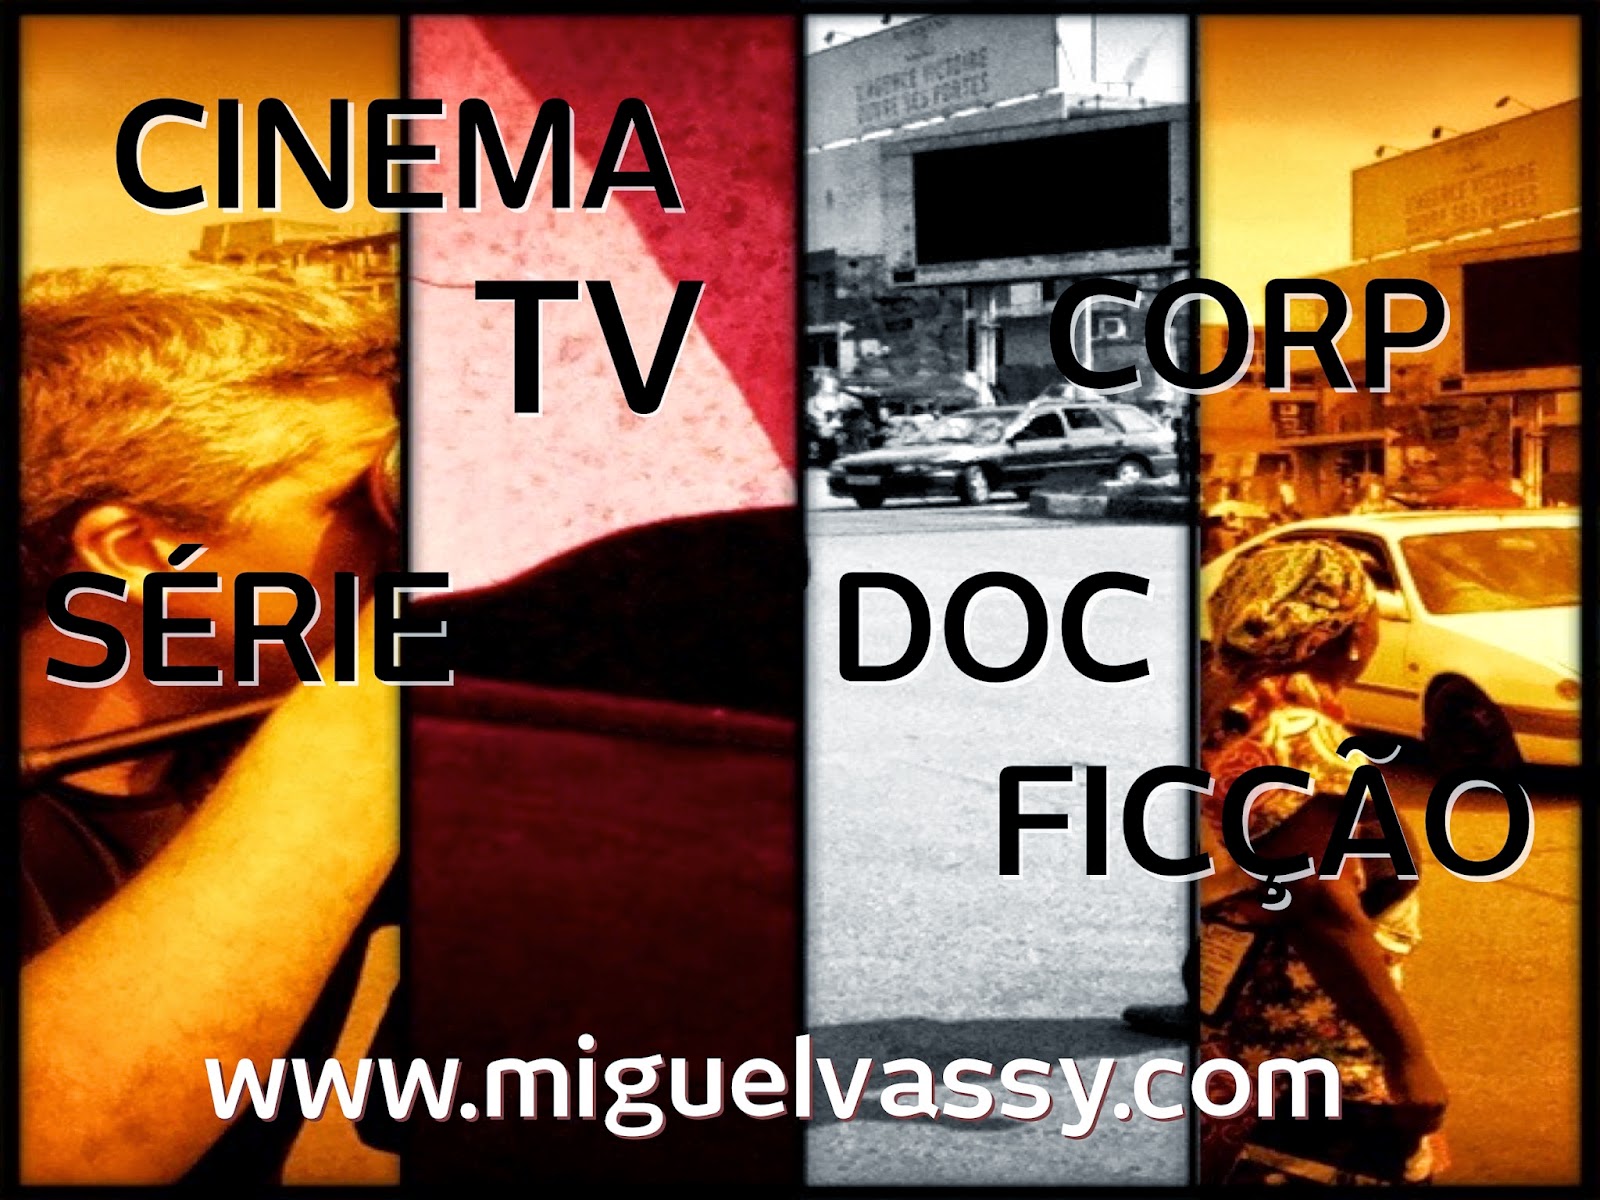 www.miguelvassy.com